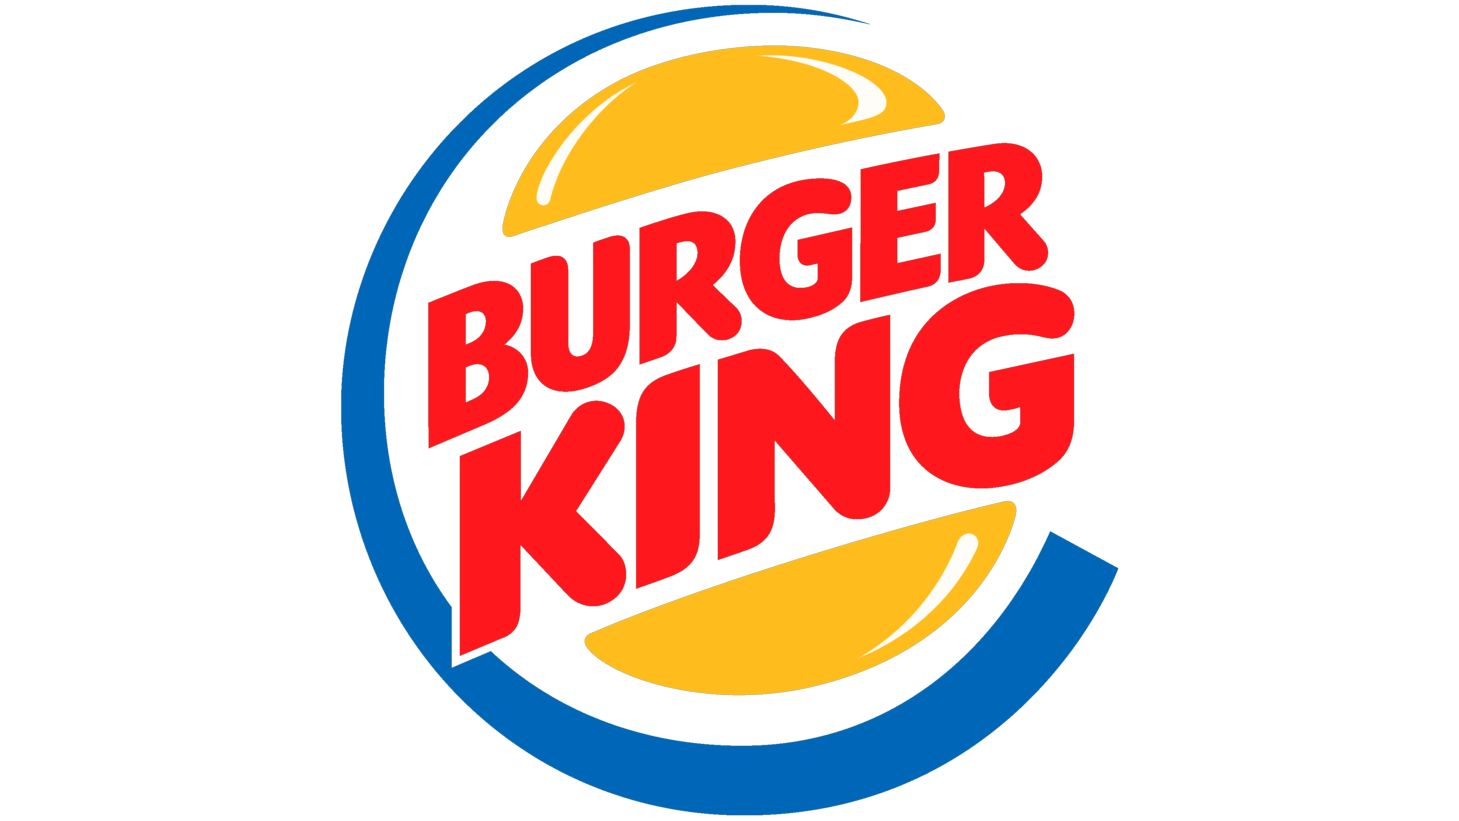 Burger king sign 1999 2021